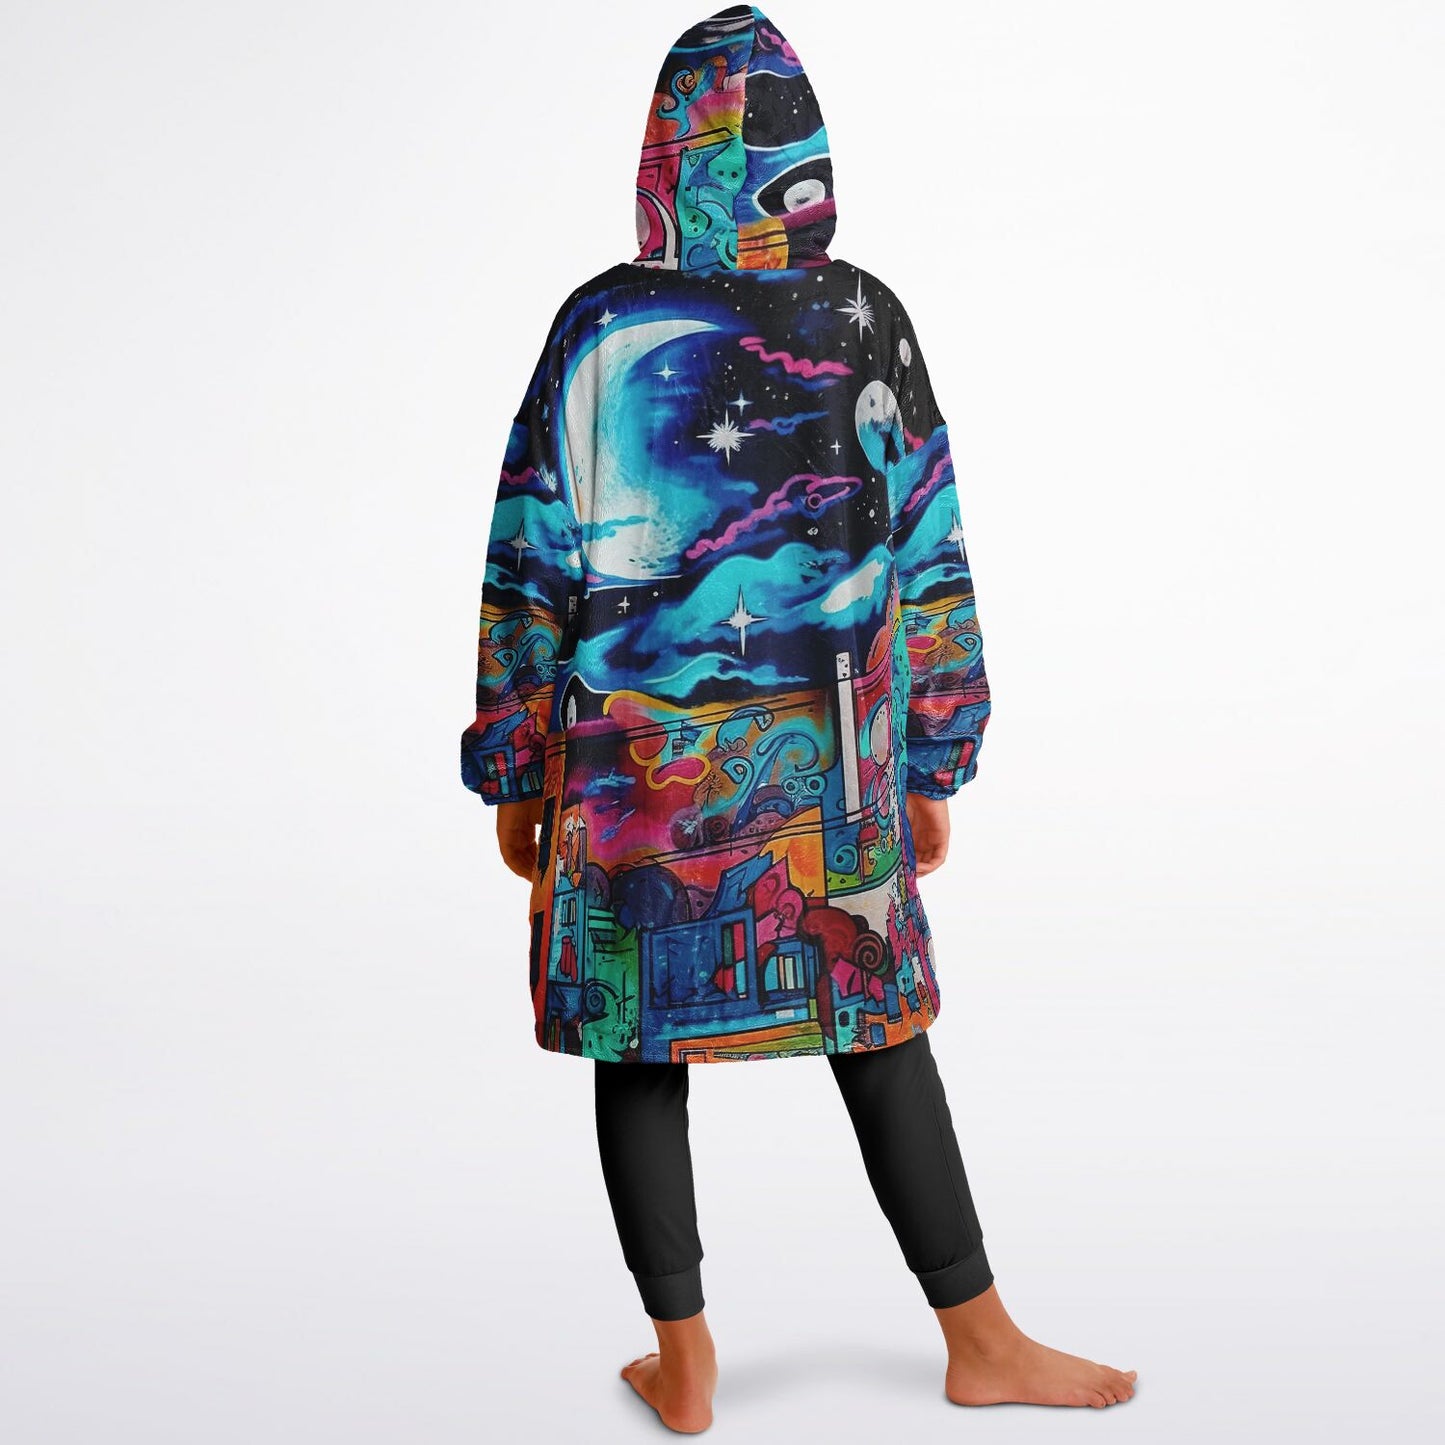 Youth Reversible Snug Hoodie, Graffiti Moon Style, Snow Flake Design